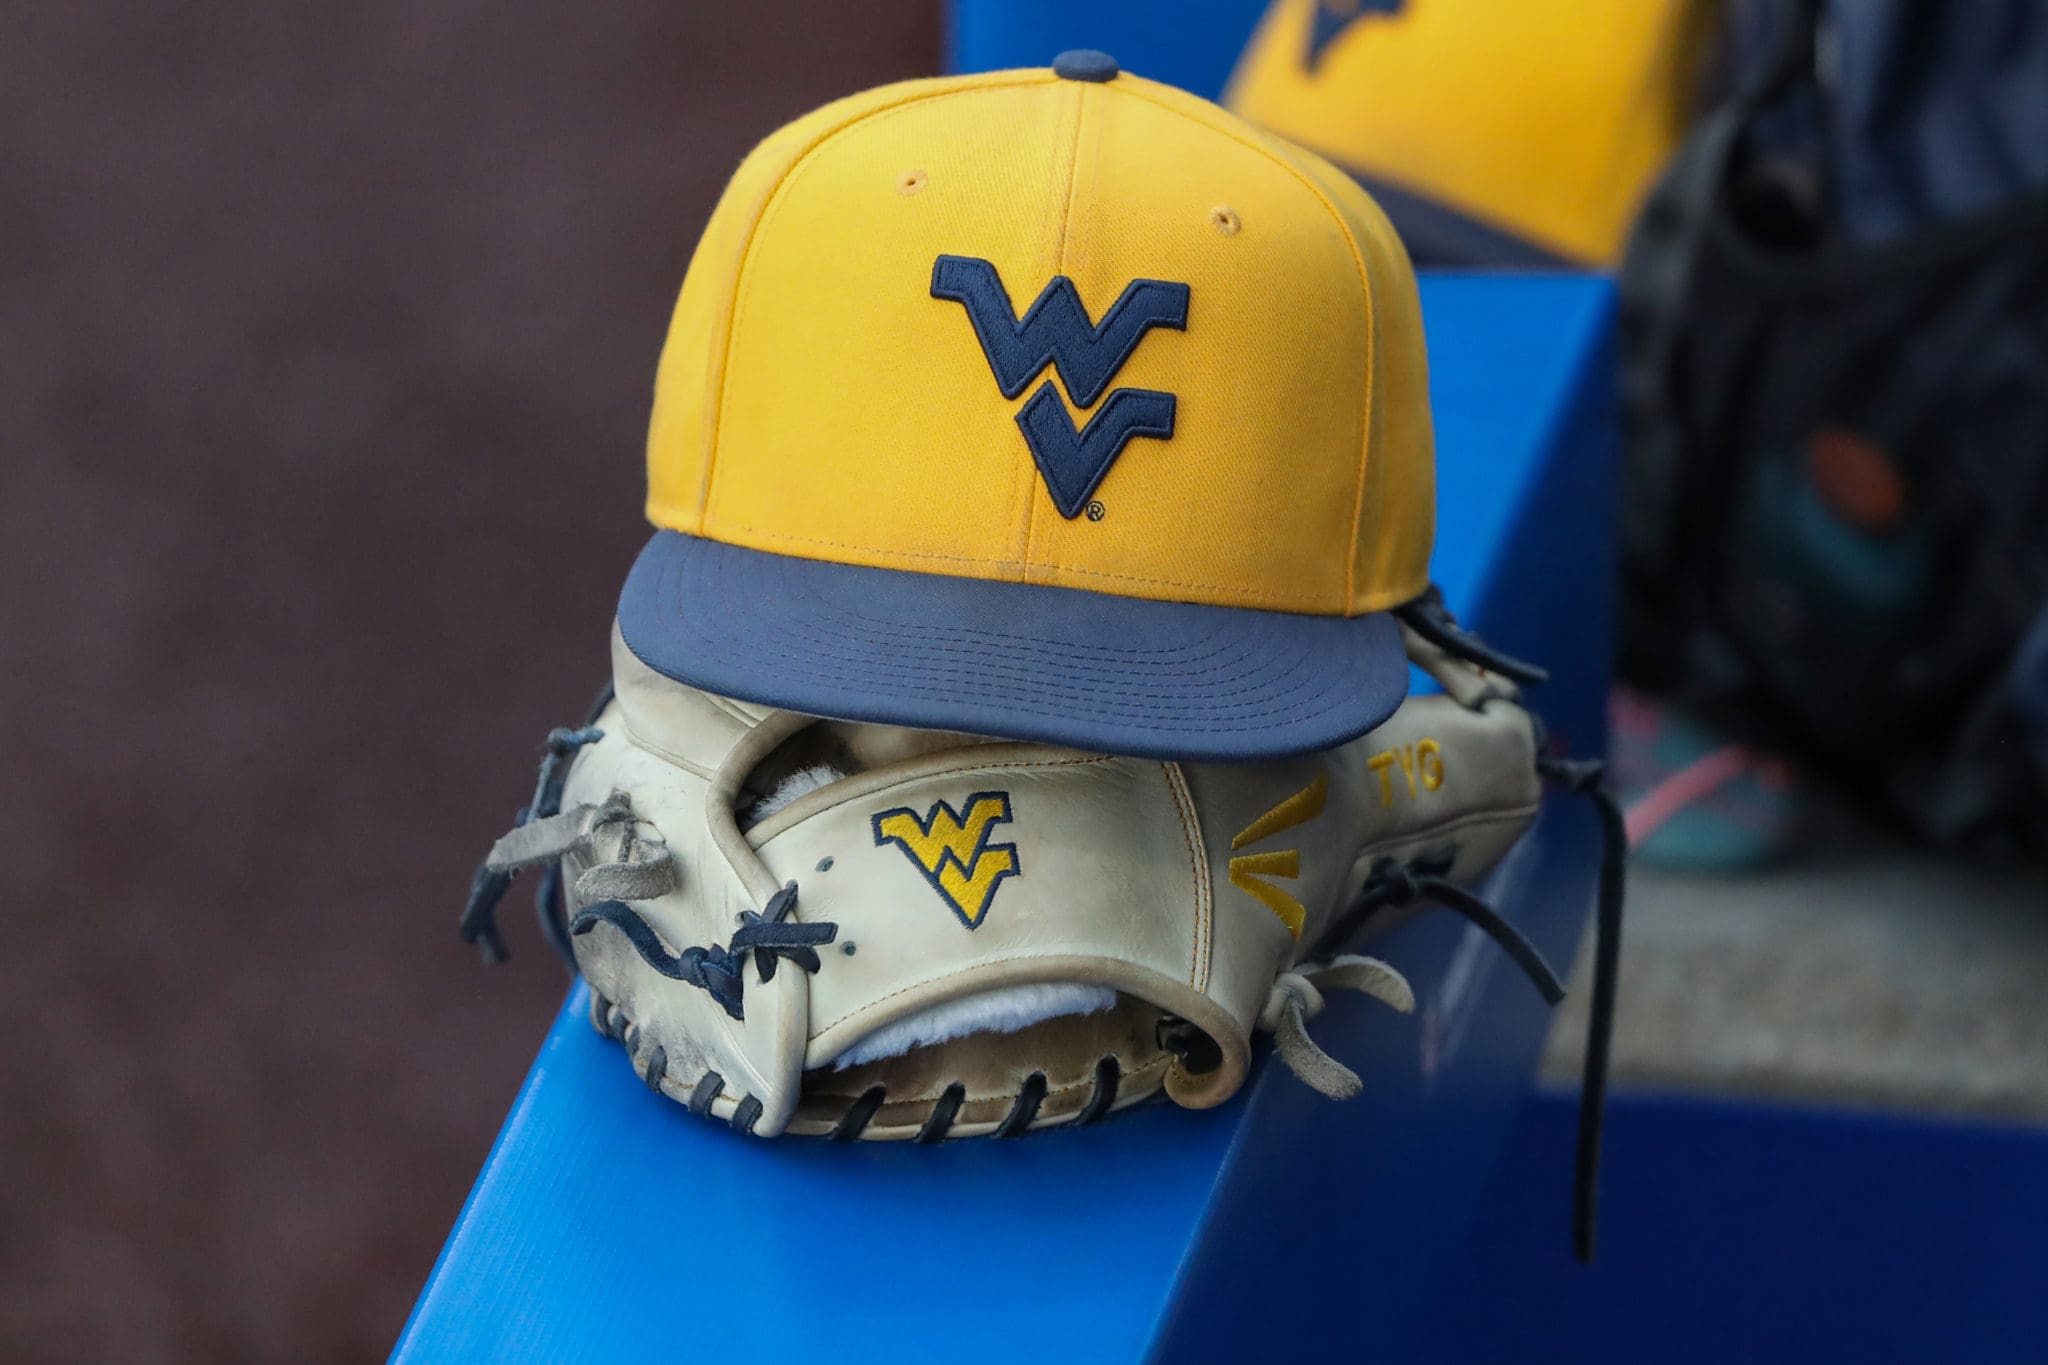 WVU baseball hat and glove